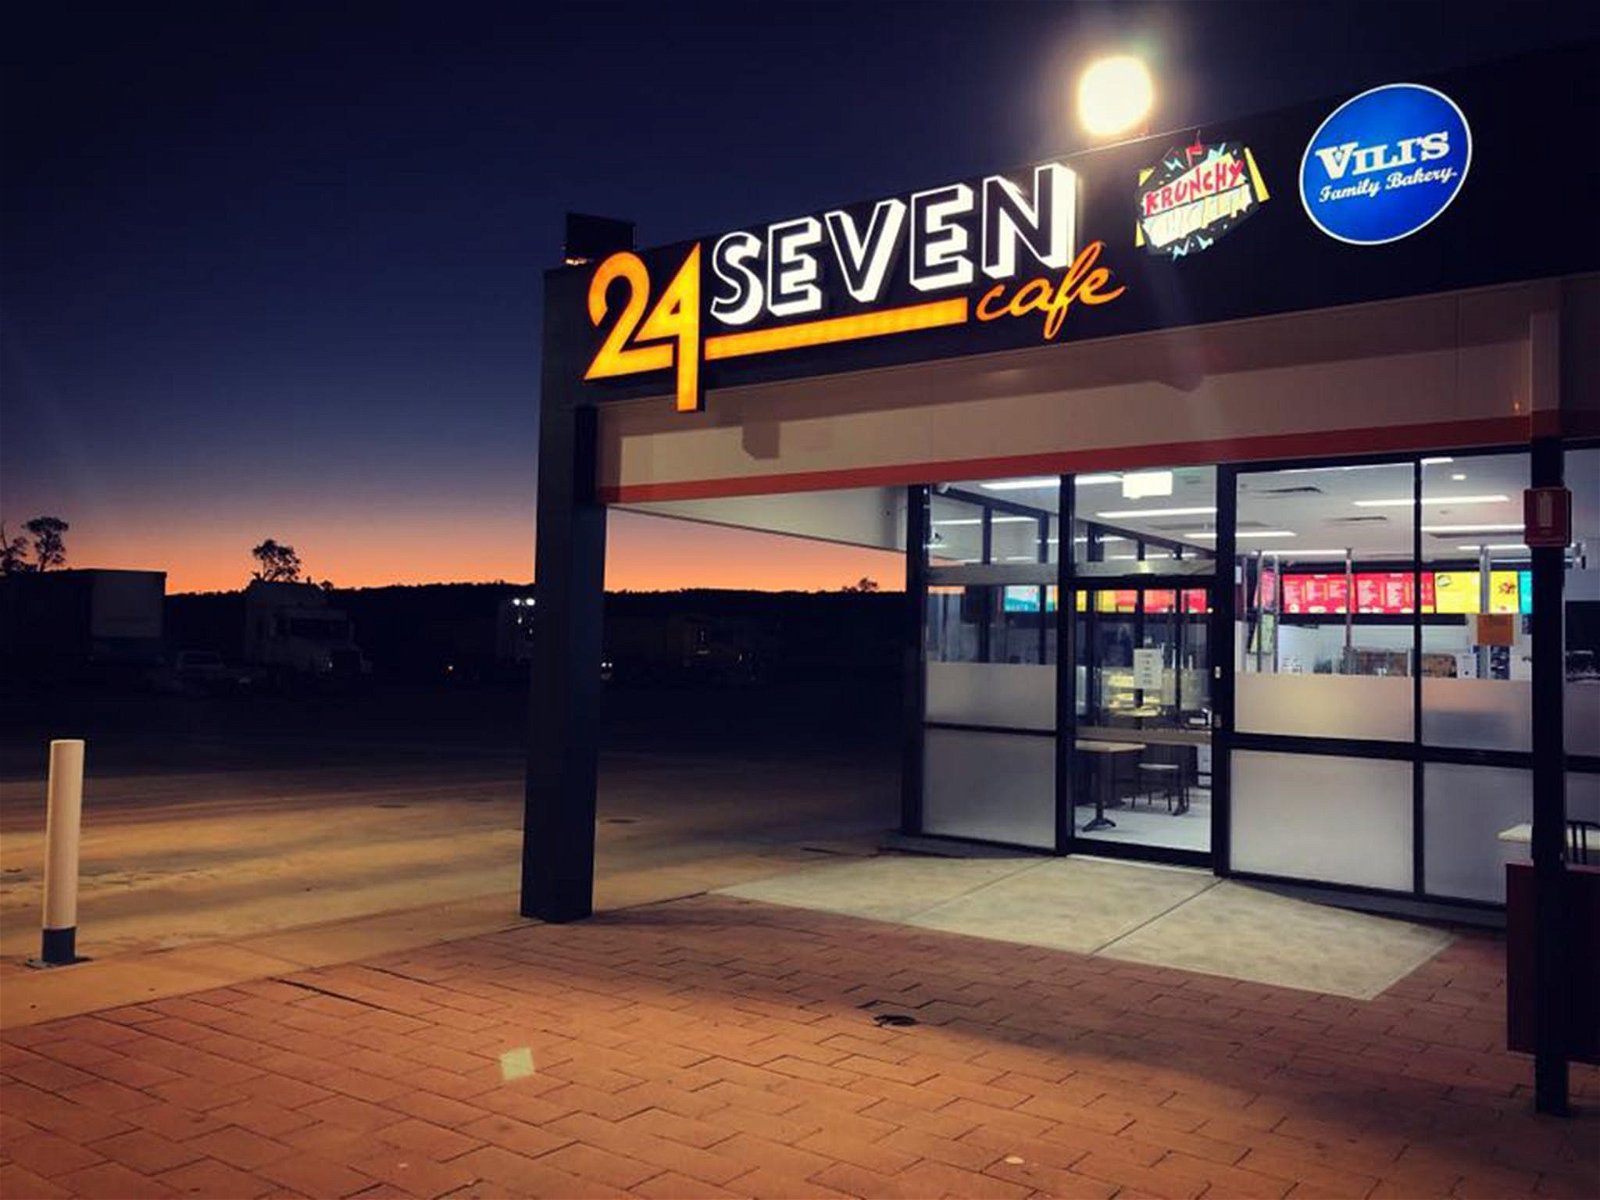 24 Seven Cafe - Pubs Sydney